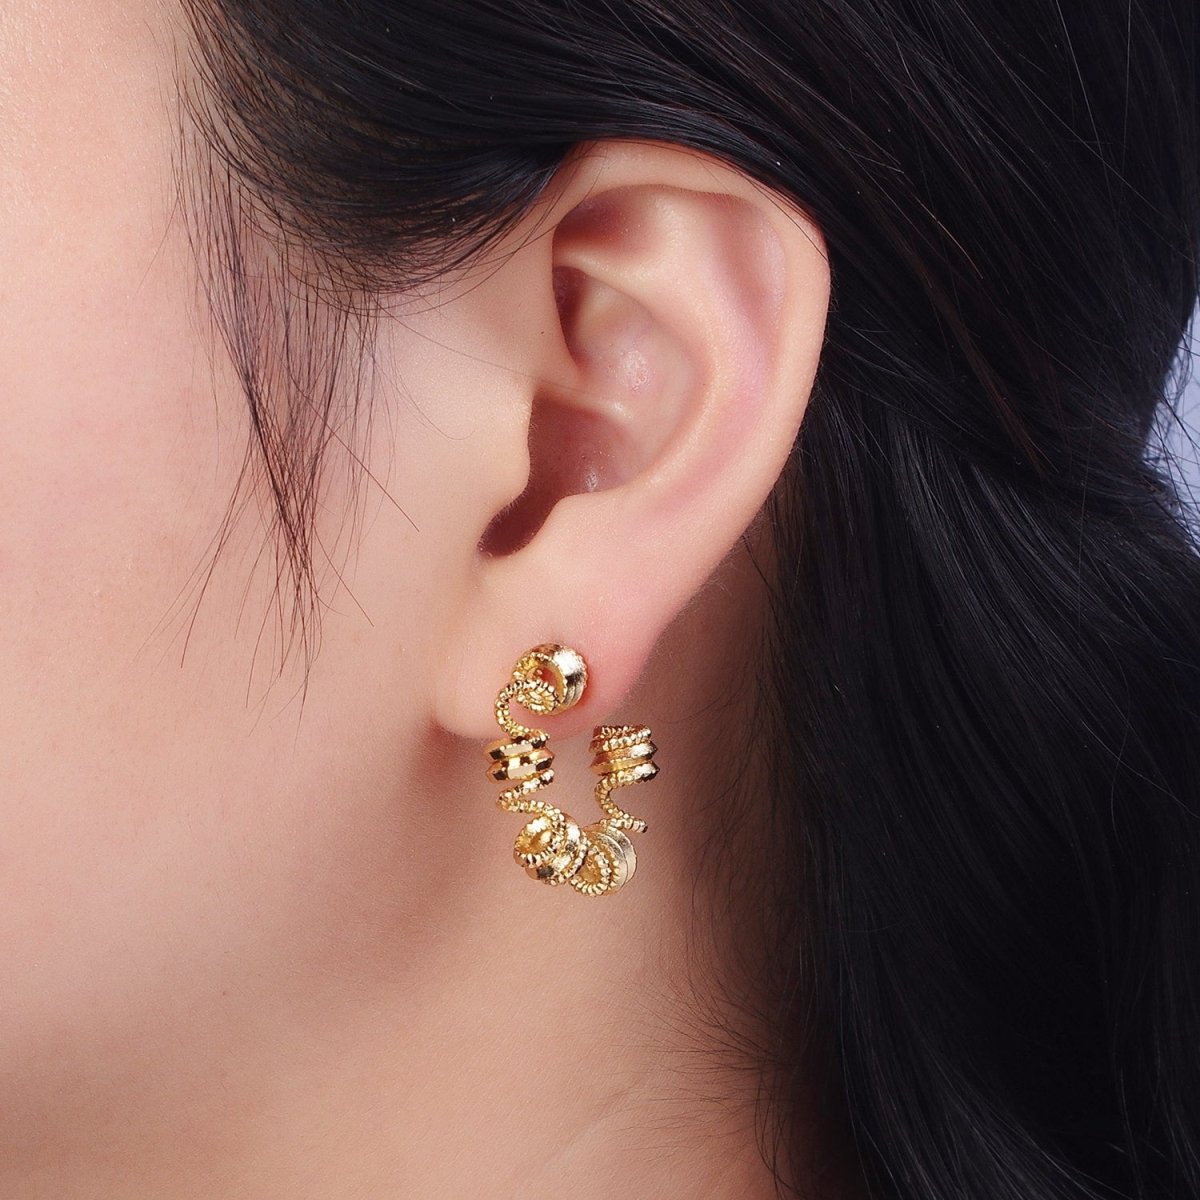 Gold Geometric Edged Spiral Coil Band C-Shaped Hoop Earrings | AE1020 - DLUXCA